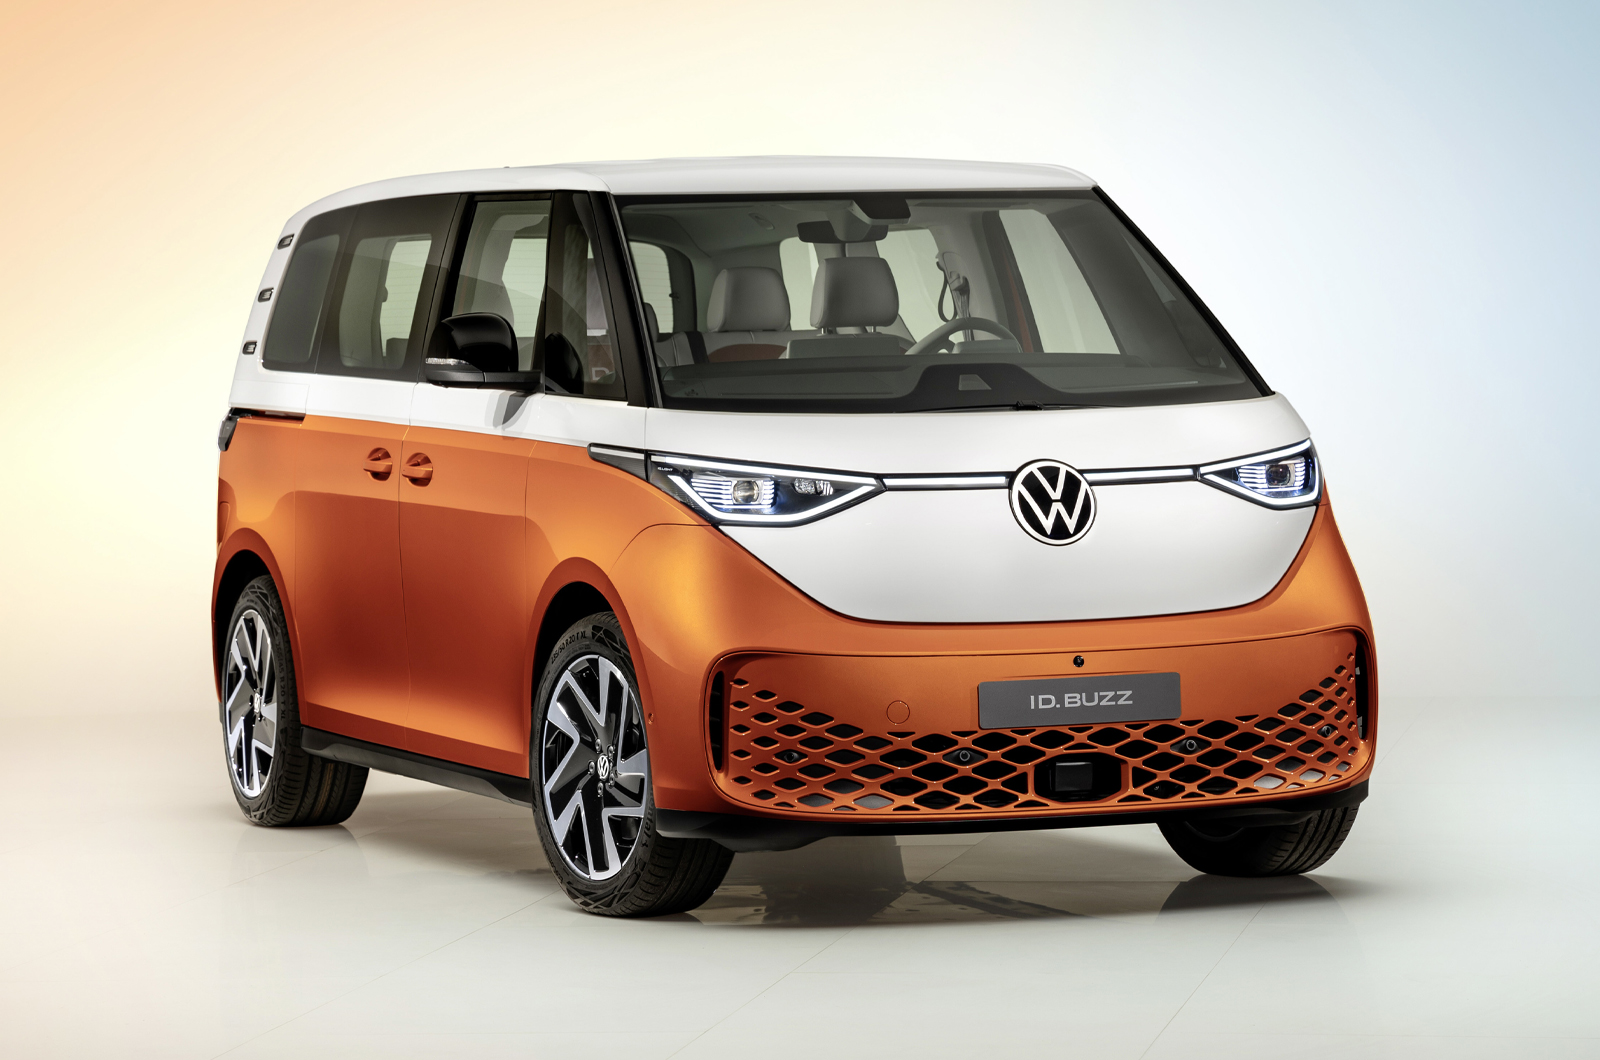 Volkswagen plots friendlier design direction with cars that 